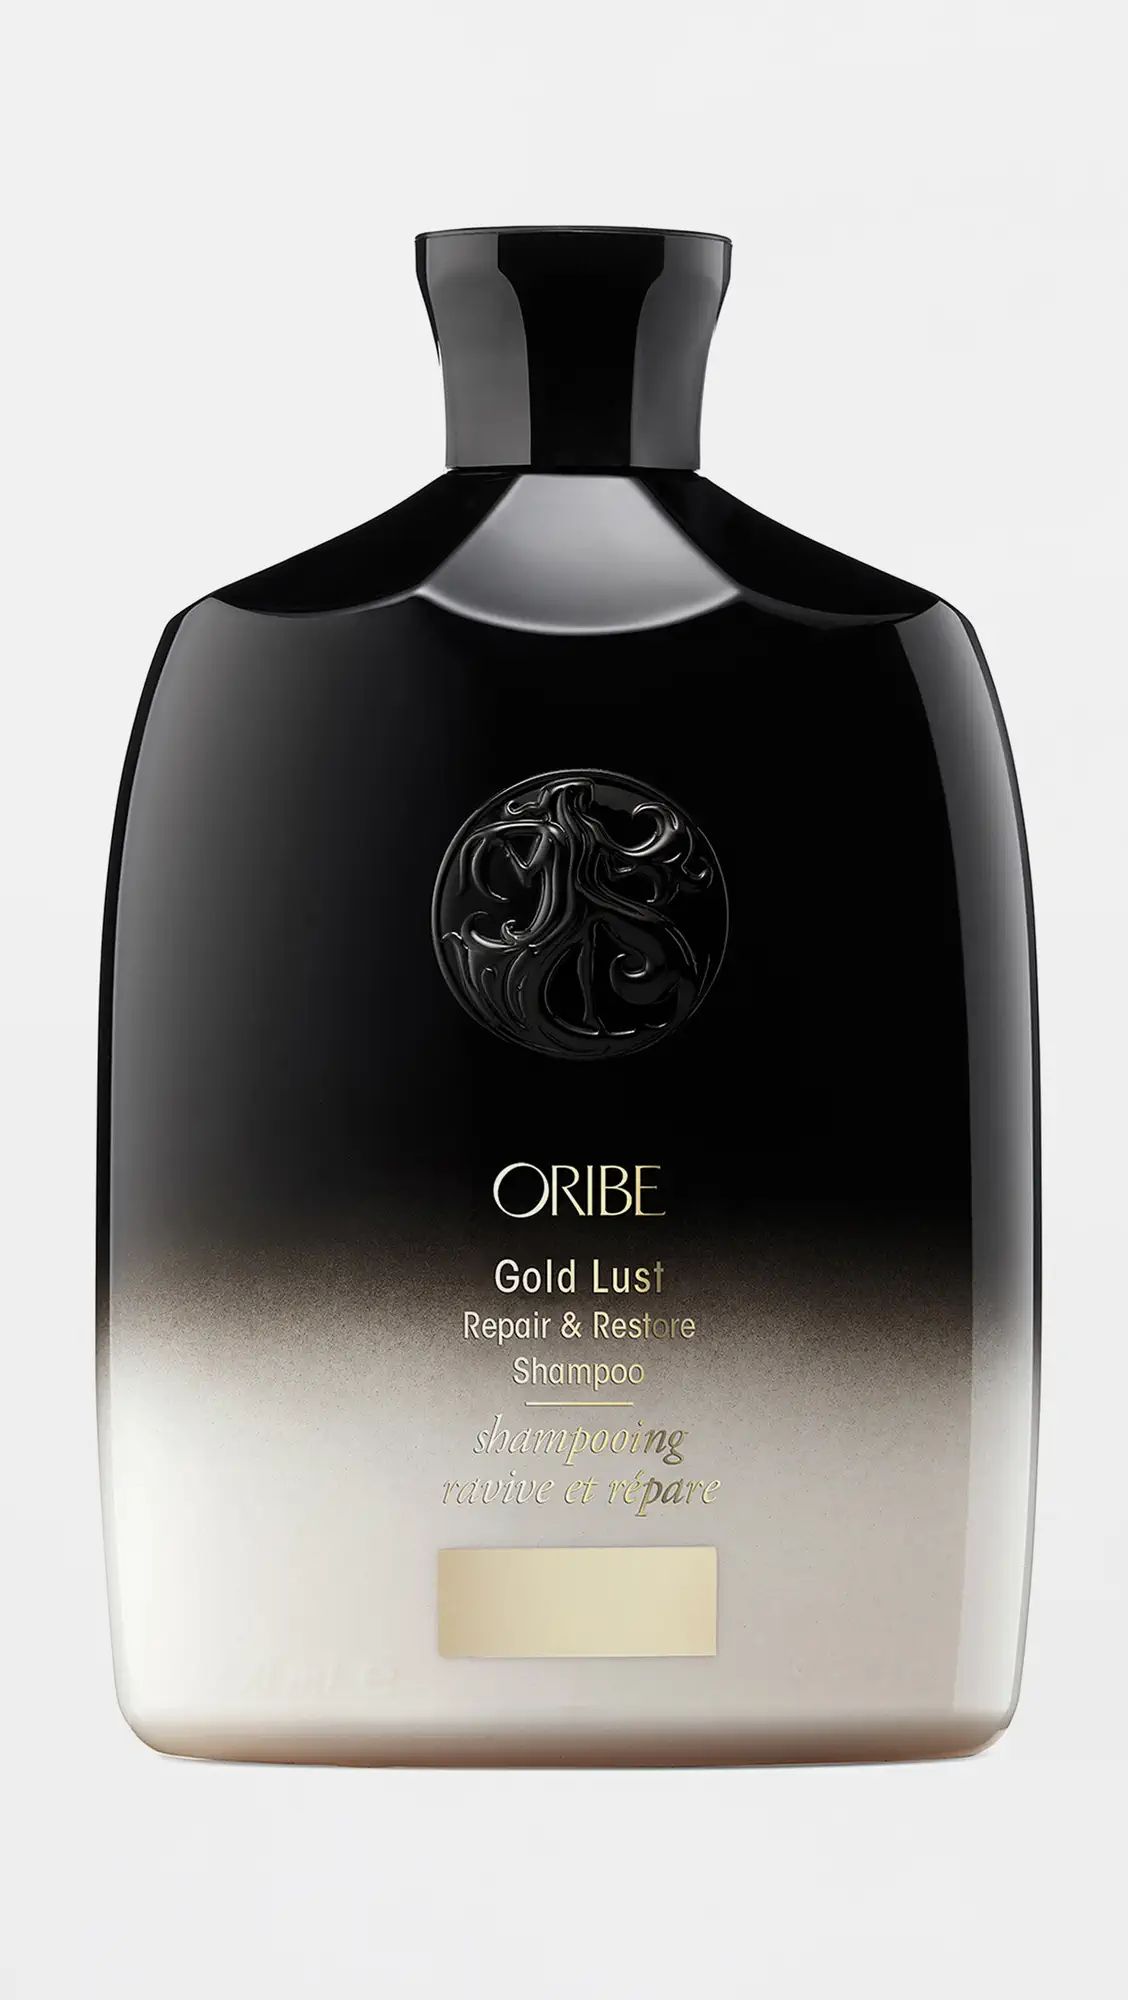 Oribe Gold Lust Repair & Restore Shampoo | Shopbop | Shopbop